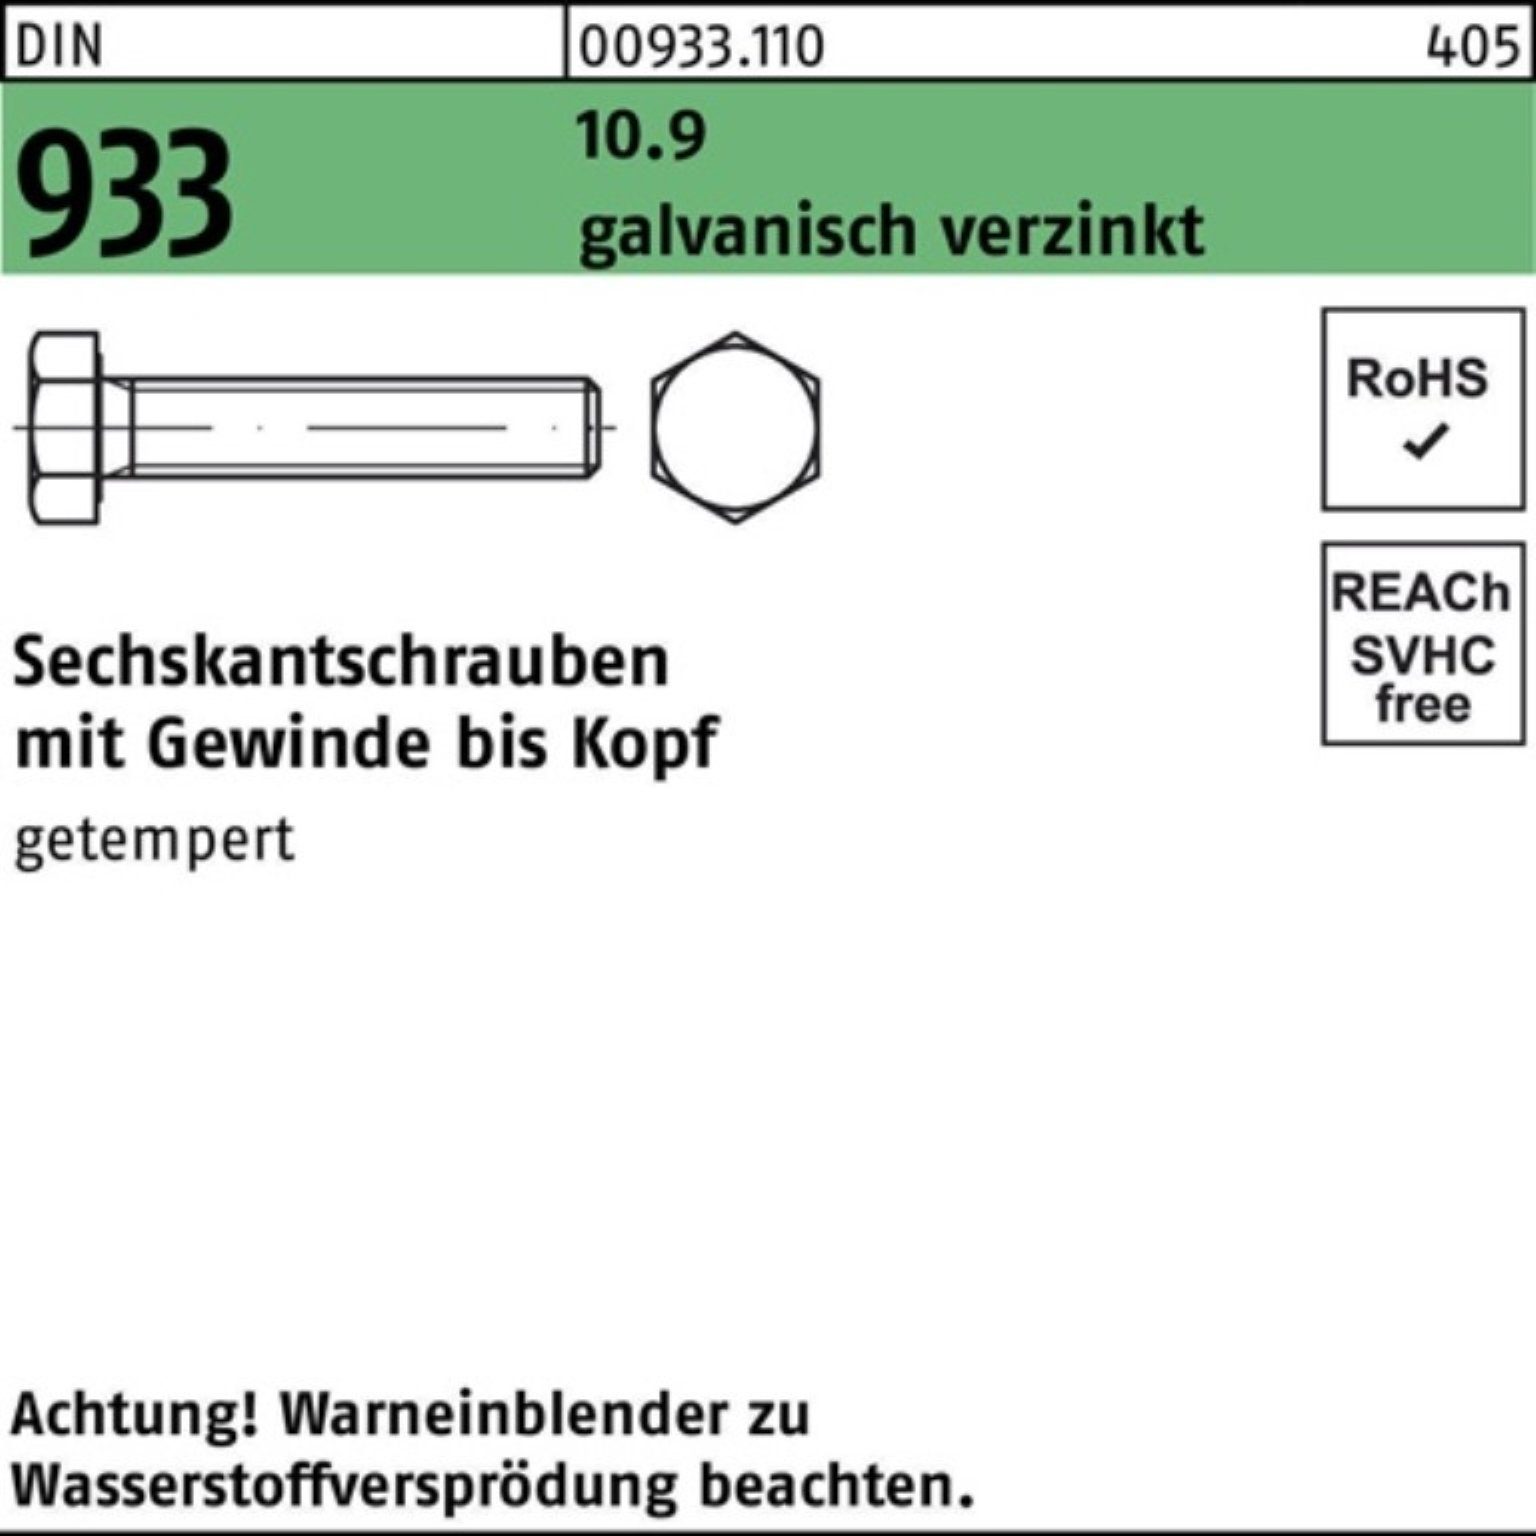 1 VG Sechskantschraube galv.verz. DIN 190 Pack 100er St 933 Reyher Sechskantschraube M36x 10.9